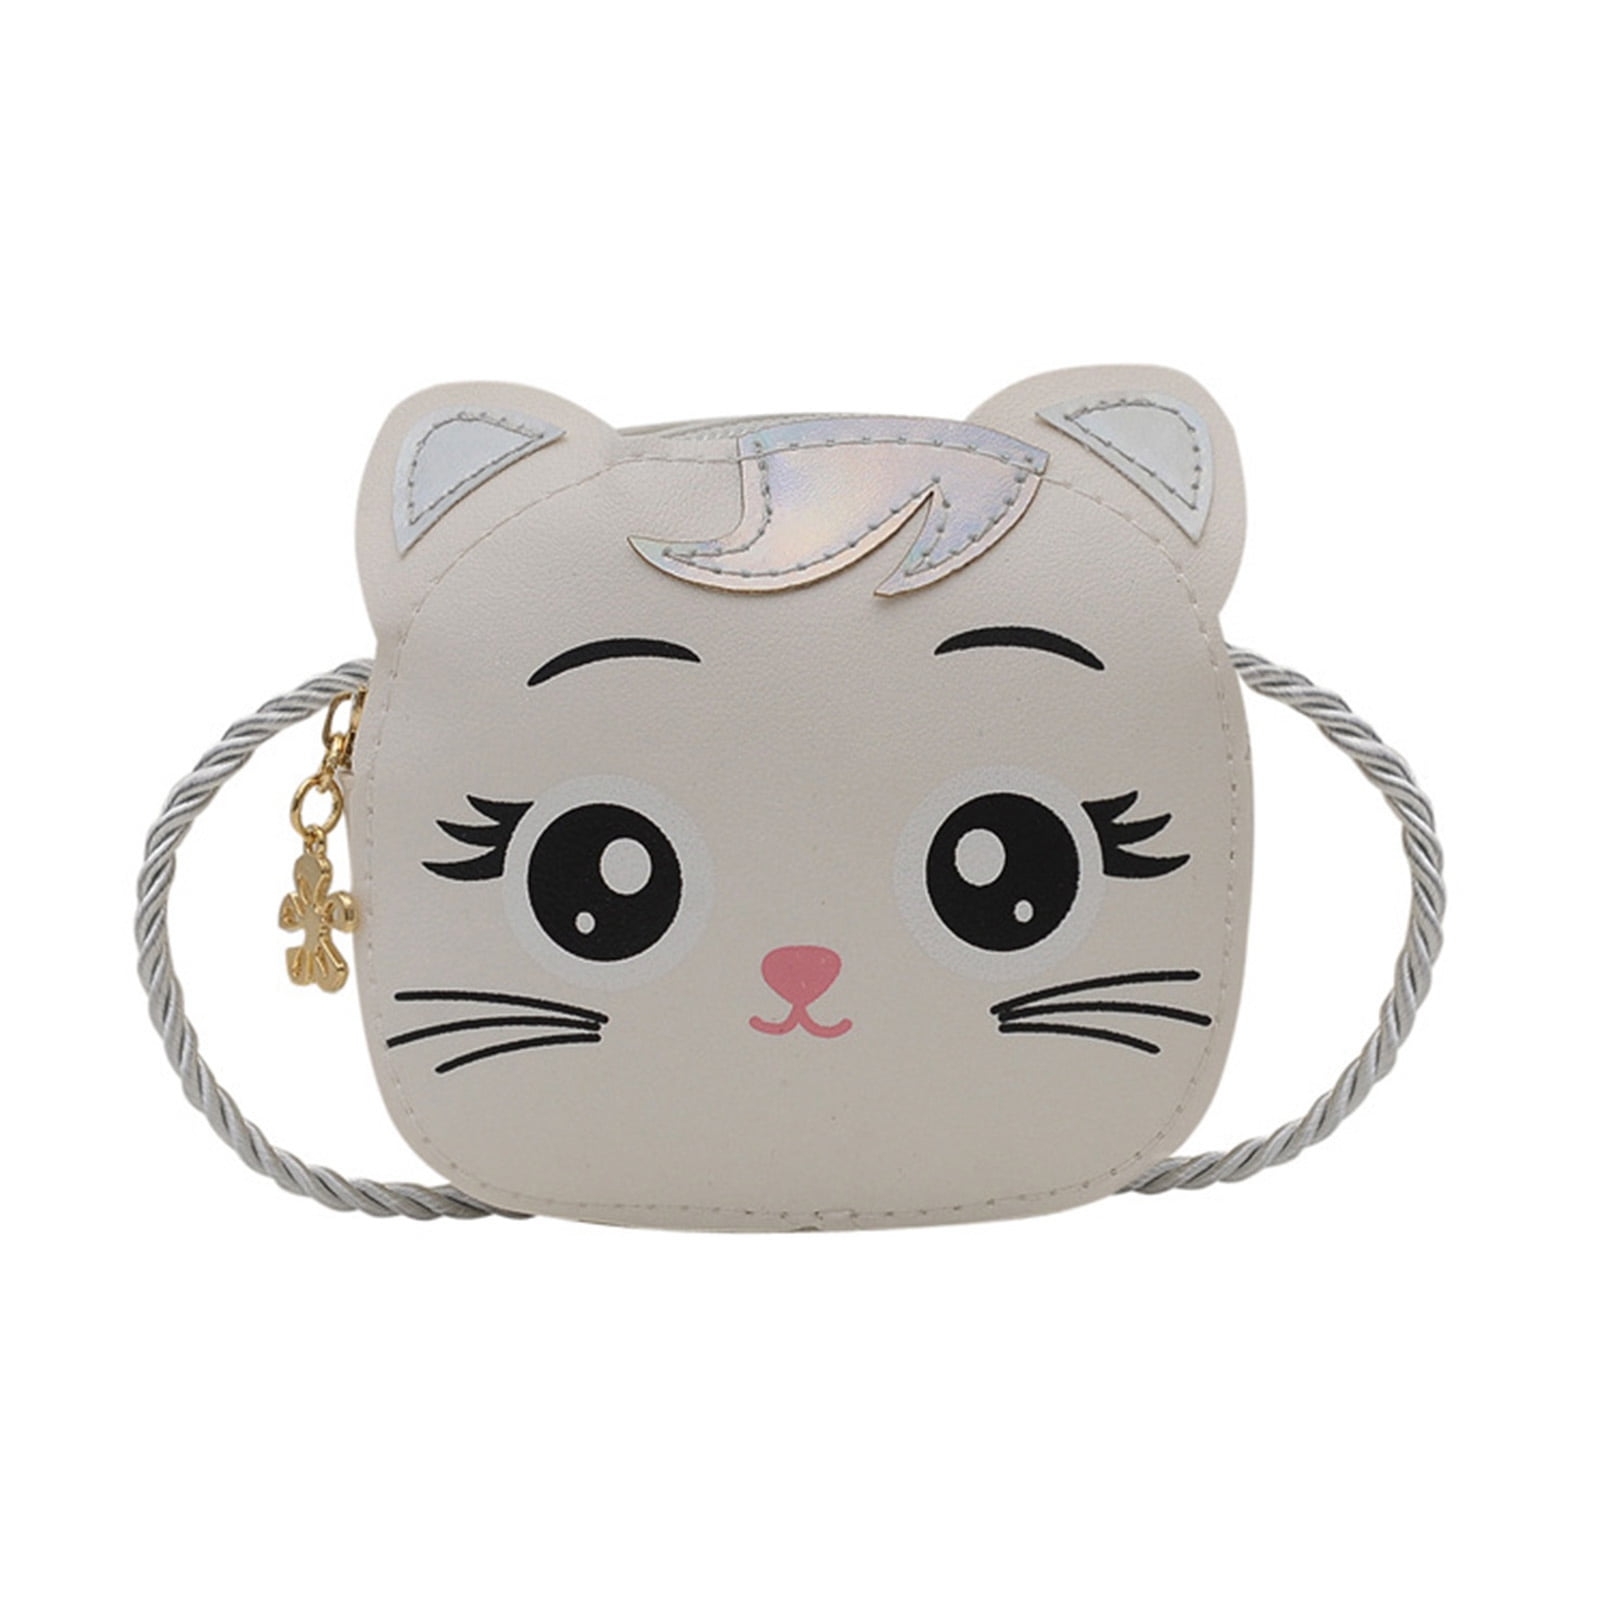 Adorable White Kitty Crossbody Bag